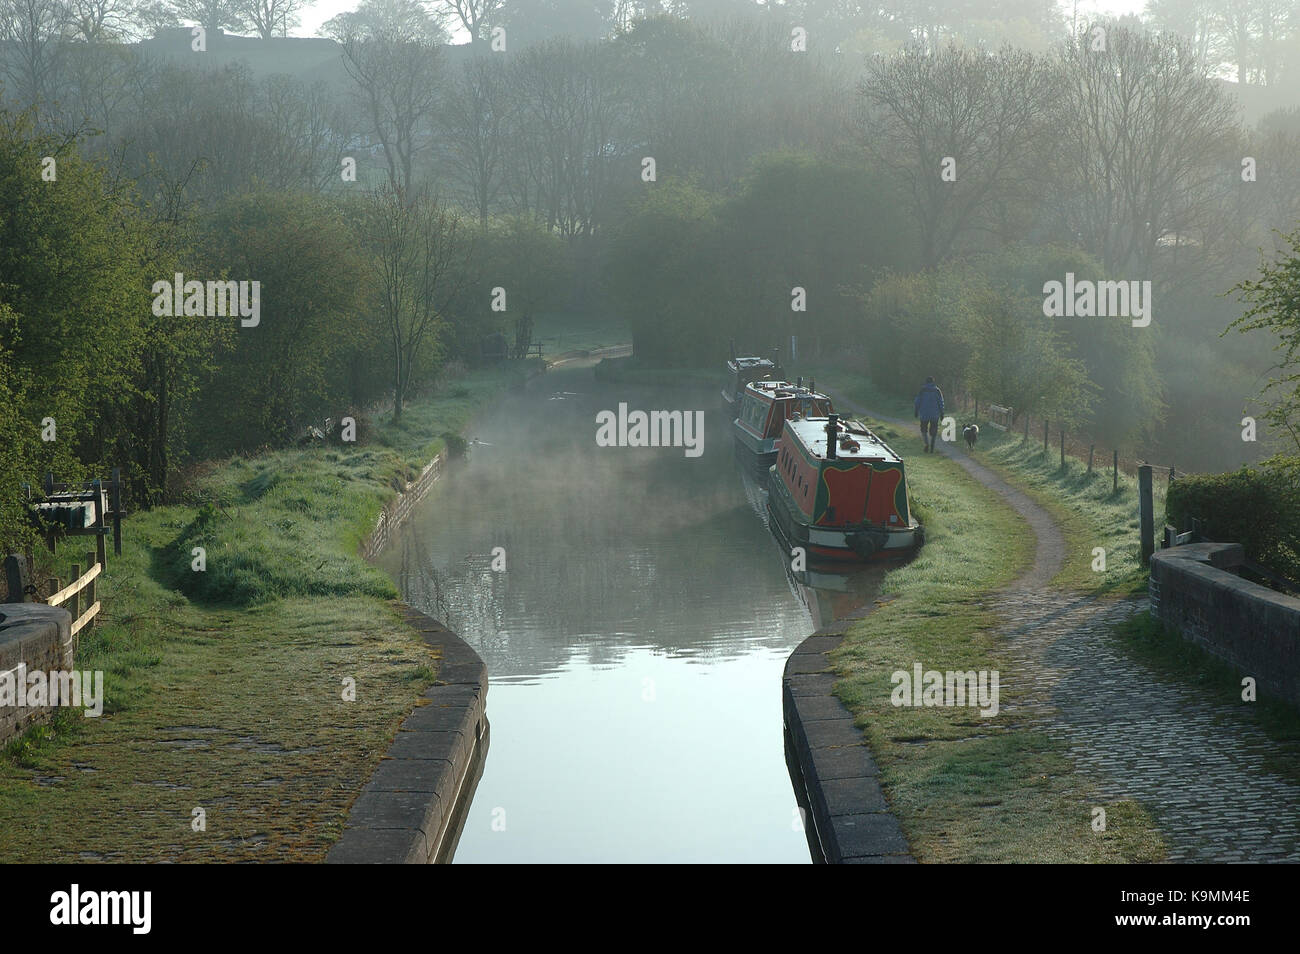 Misty morning, Boats moored on Caldon Canal, Denford, Stoke on Trent, Staffordshire, England, UK, United Kingdom, Europe Stock Photo